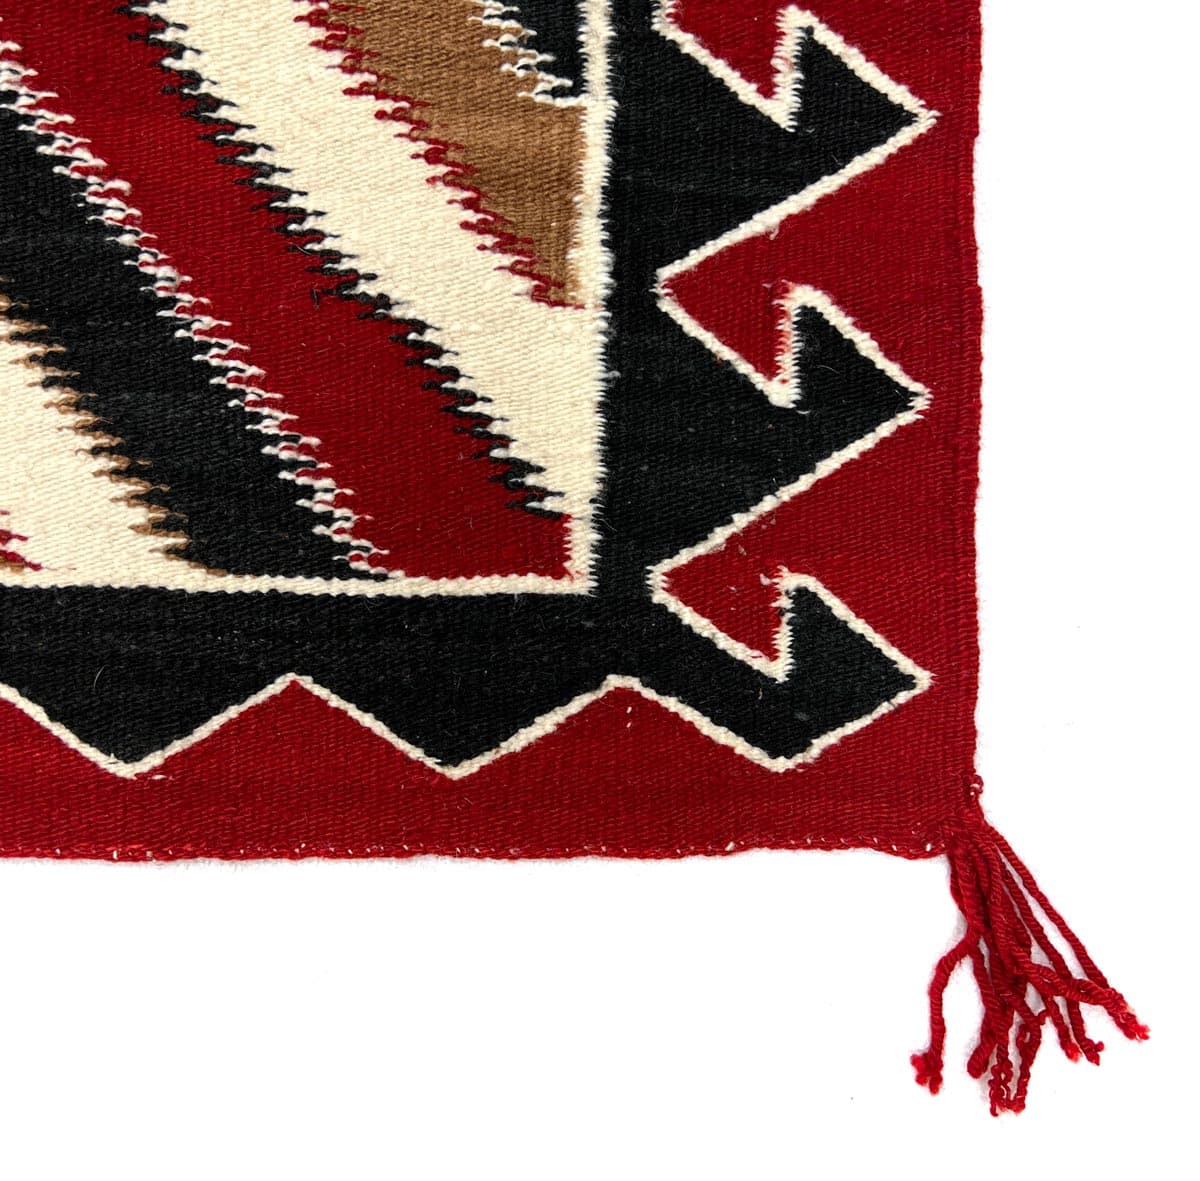 Navajo Red Mesa Rug c. 1930-40s, 57.25" x 47.5" (T5975)8
